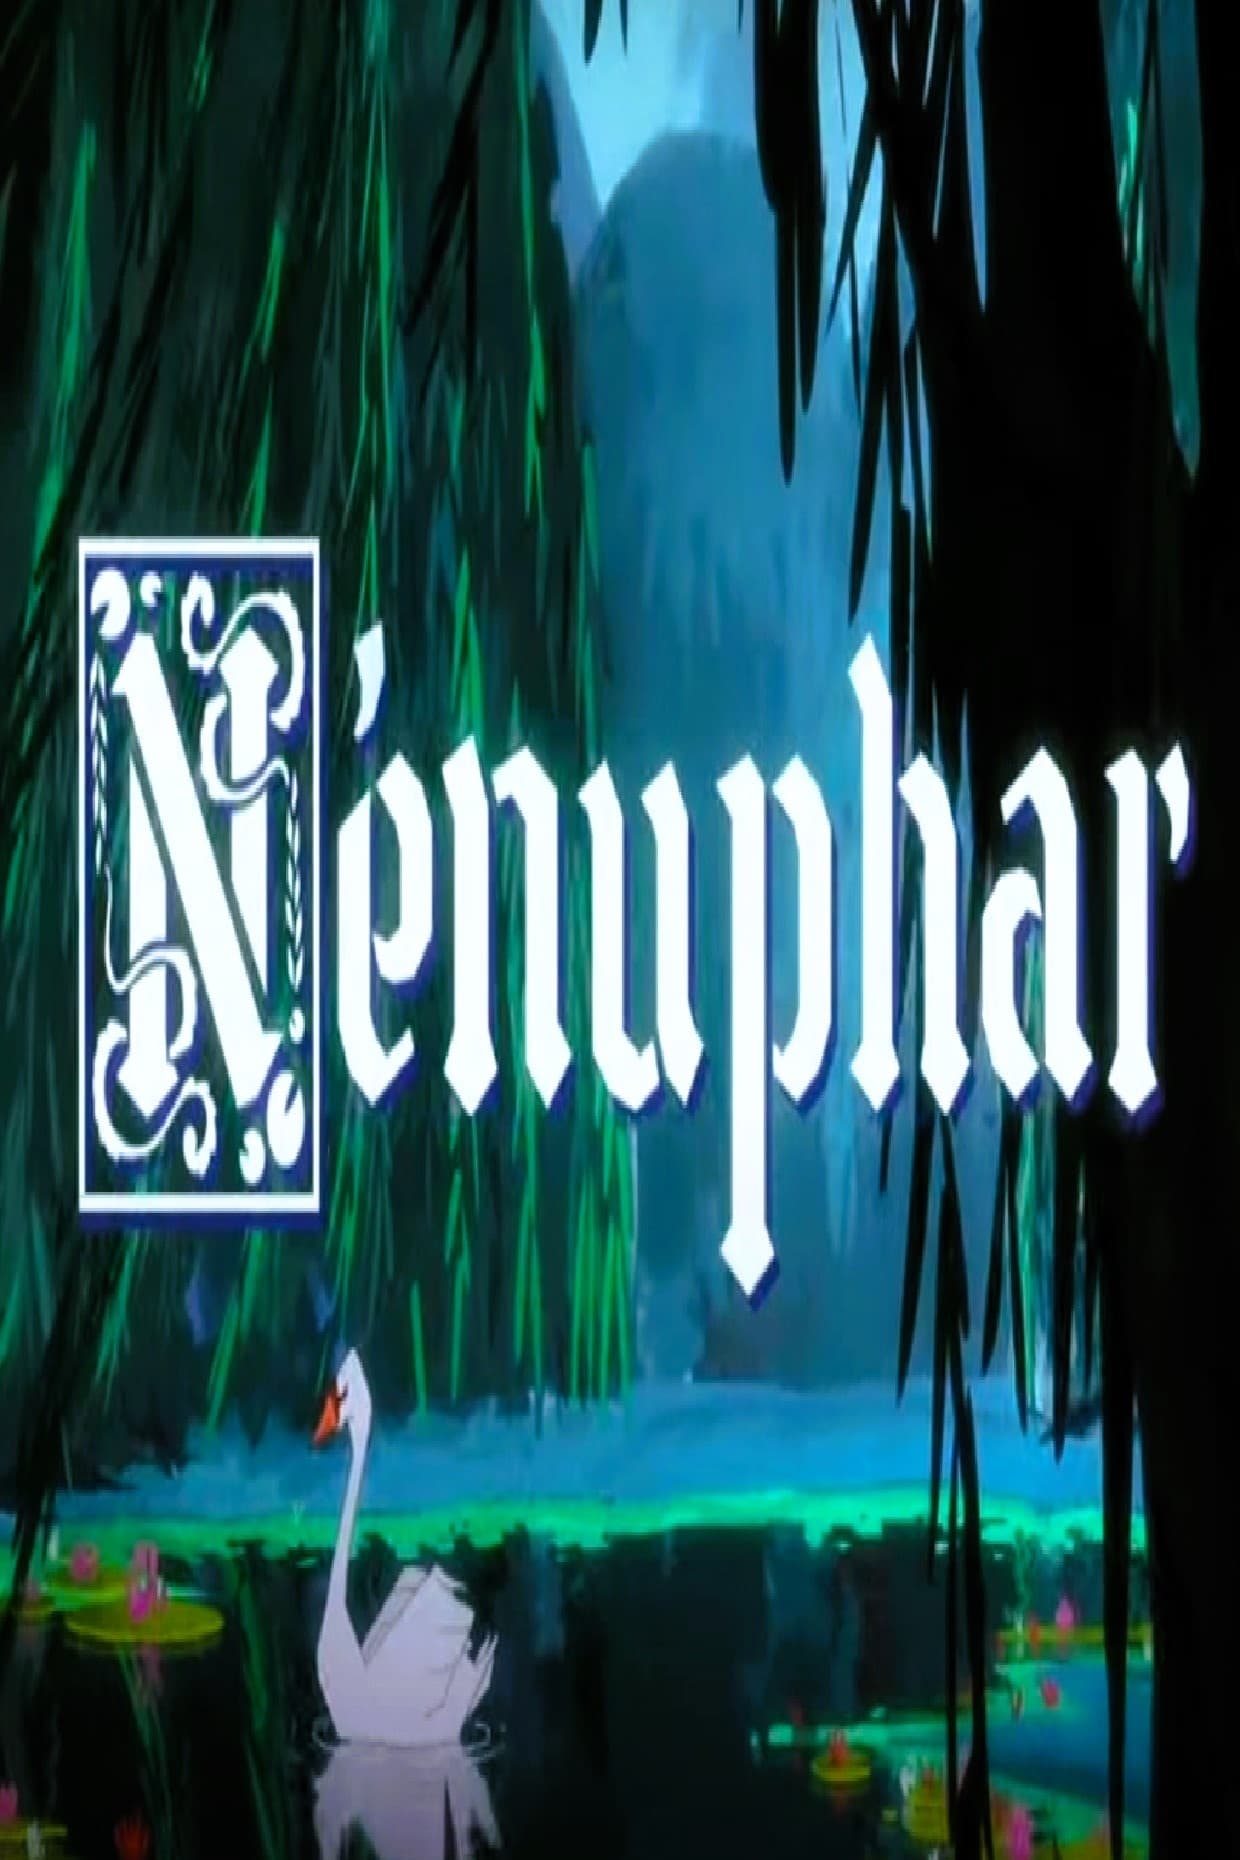 Nénuphar